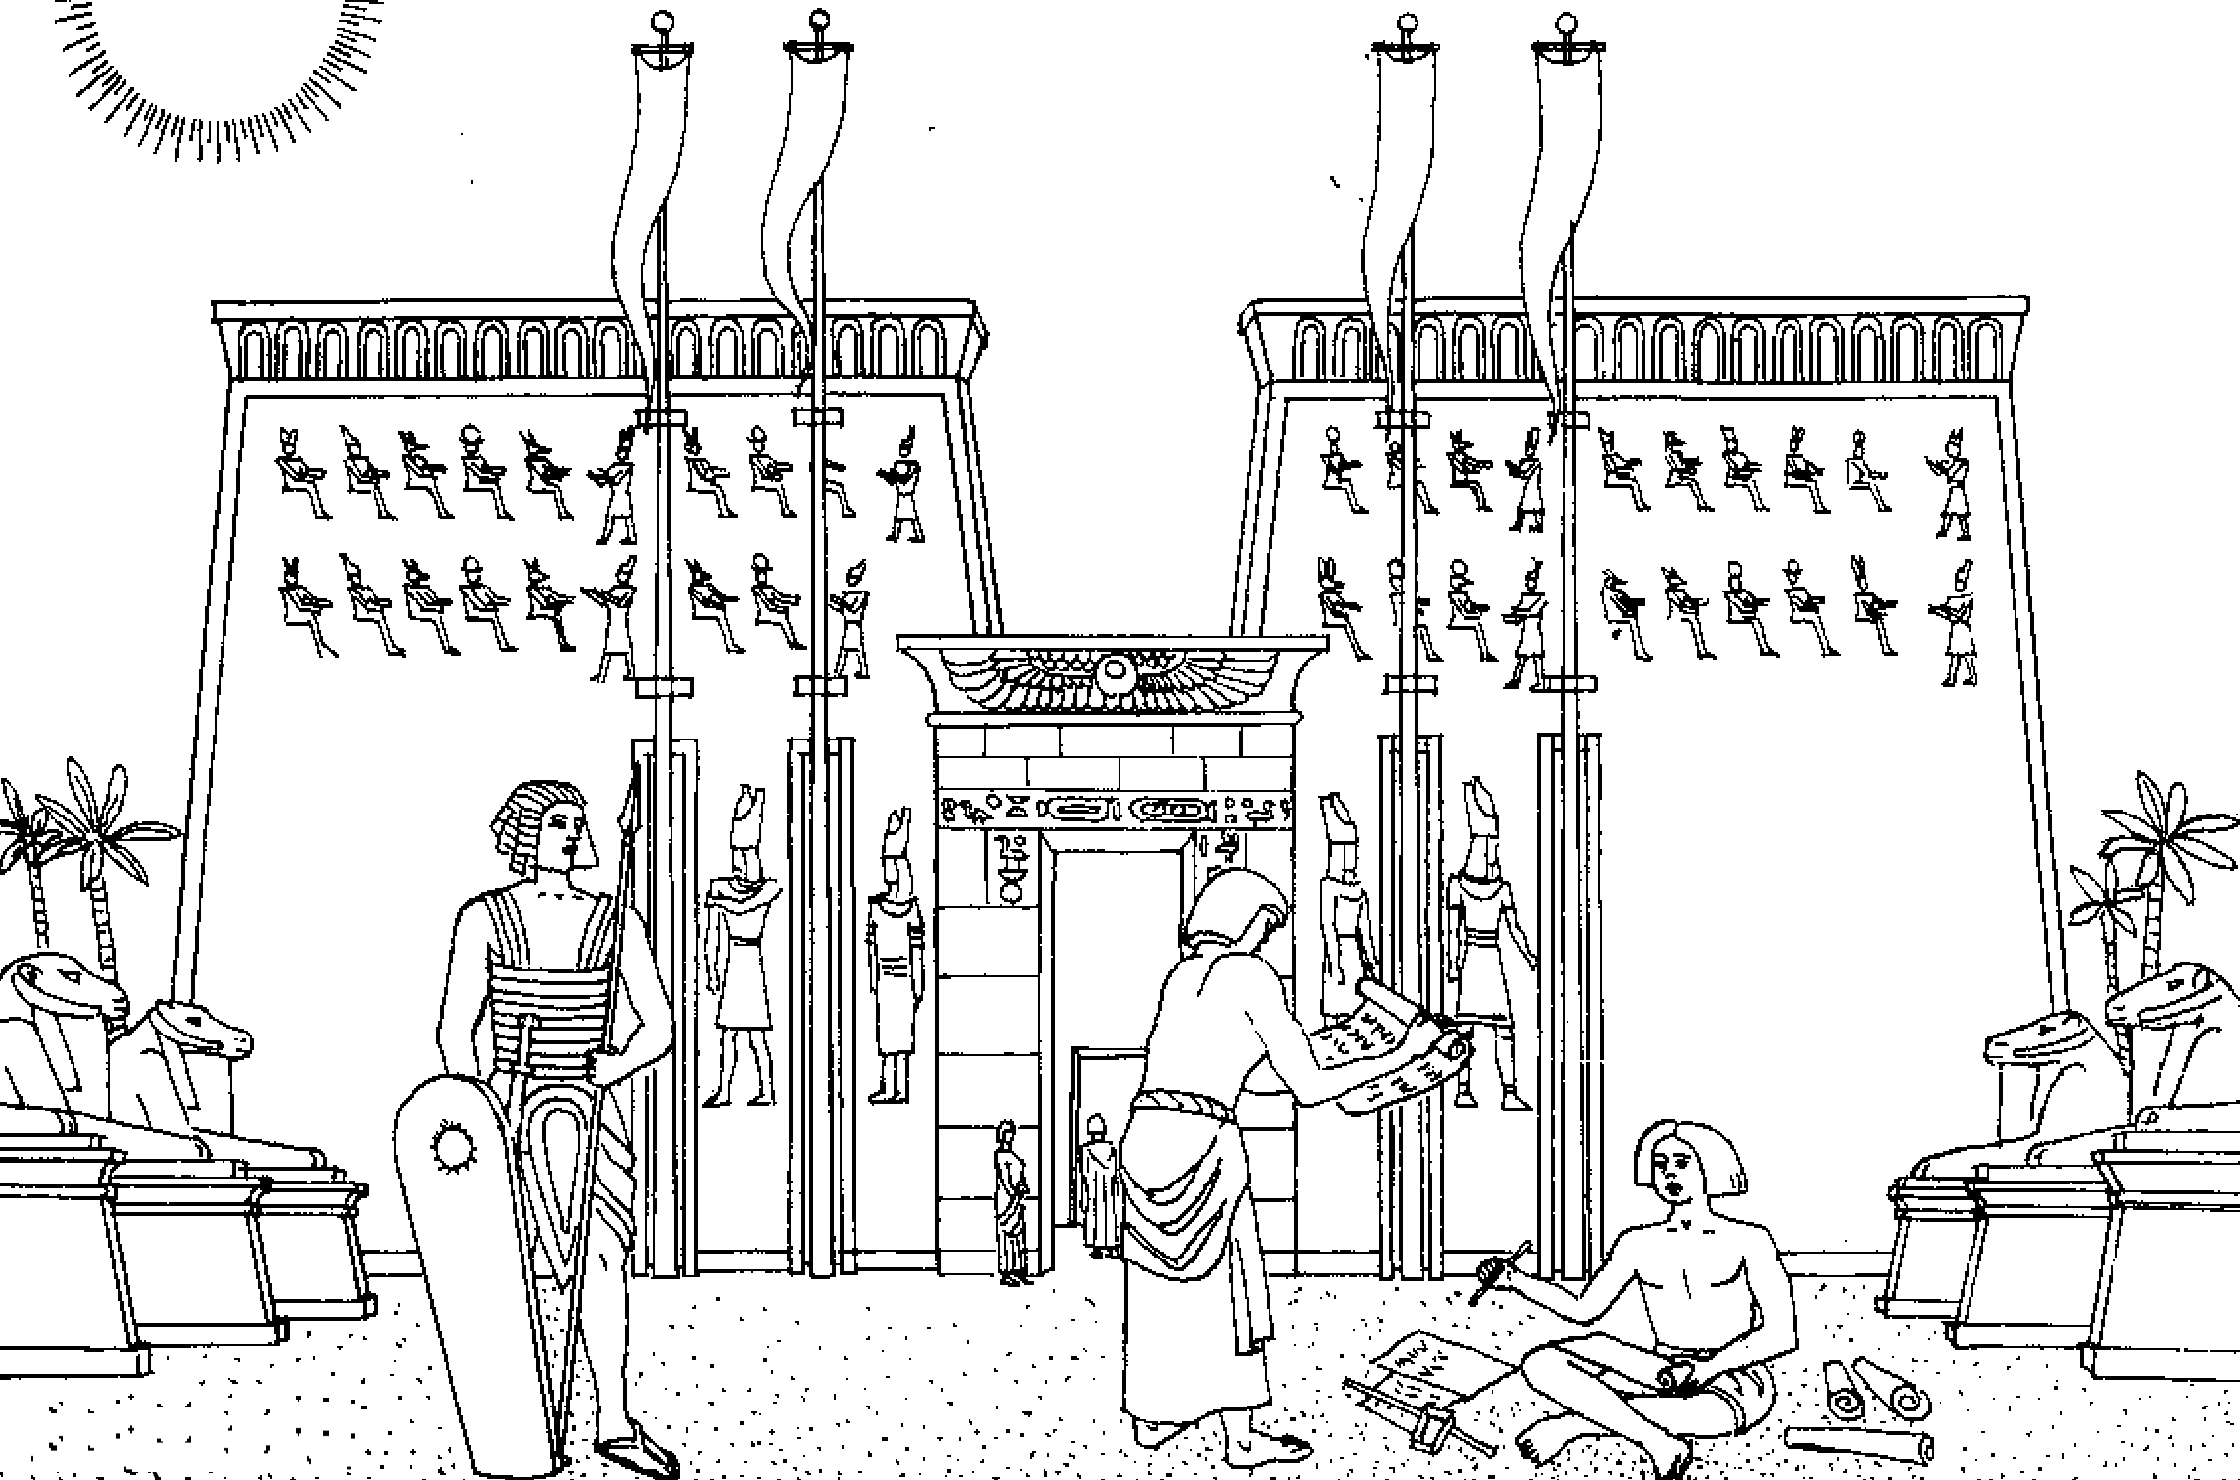 Temple egyptien